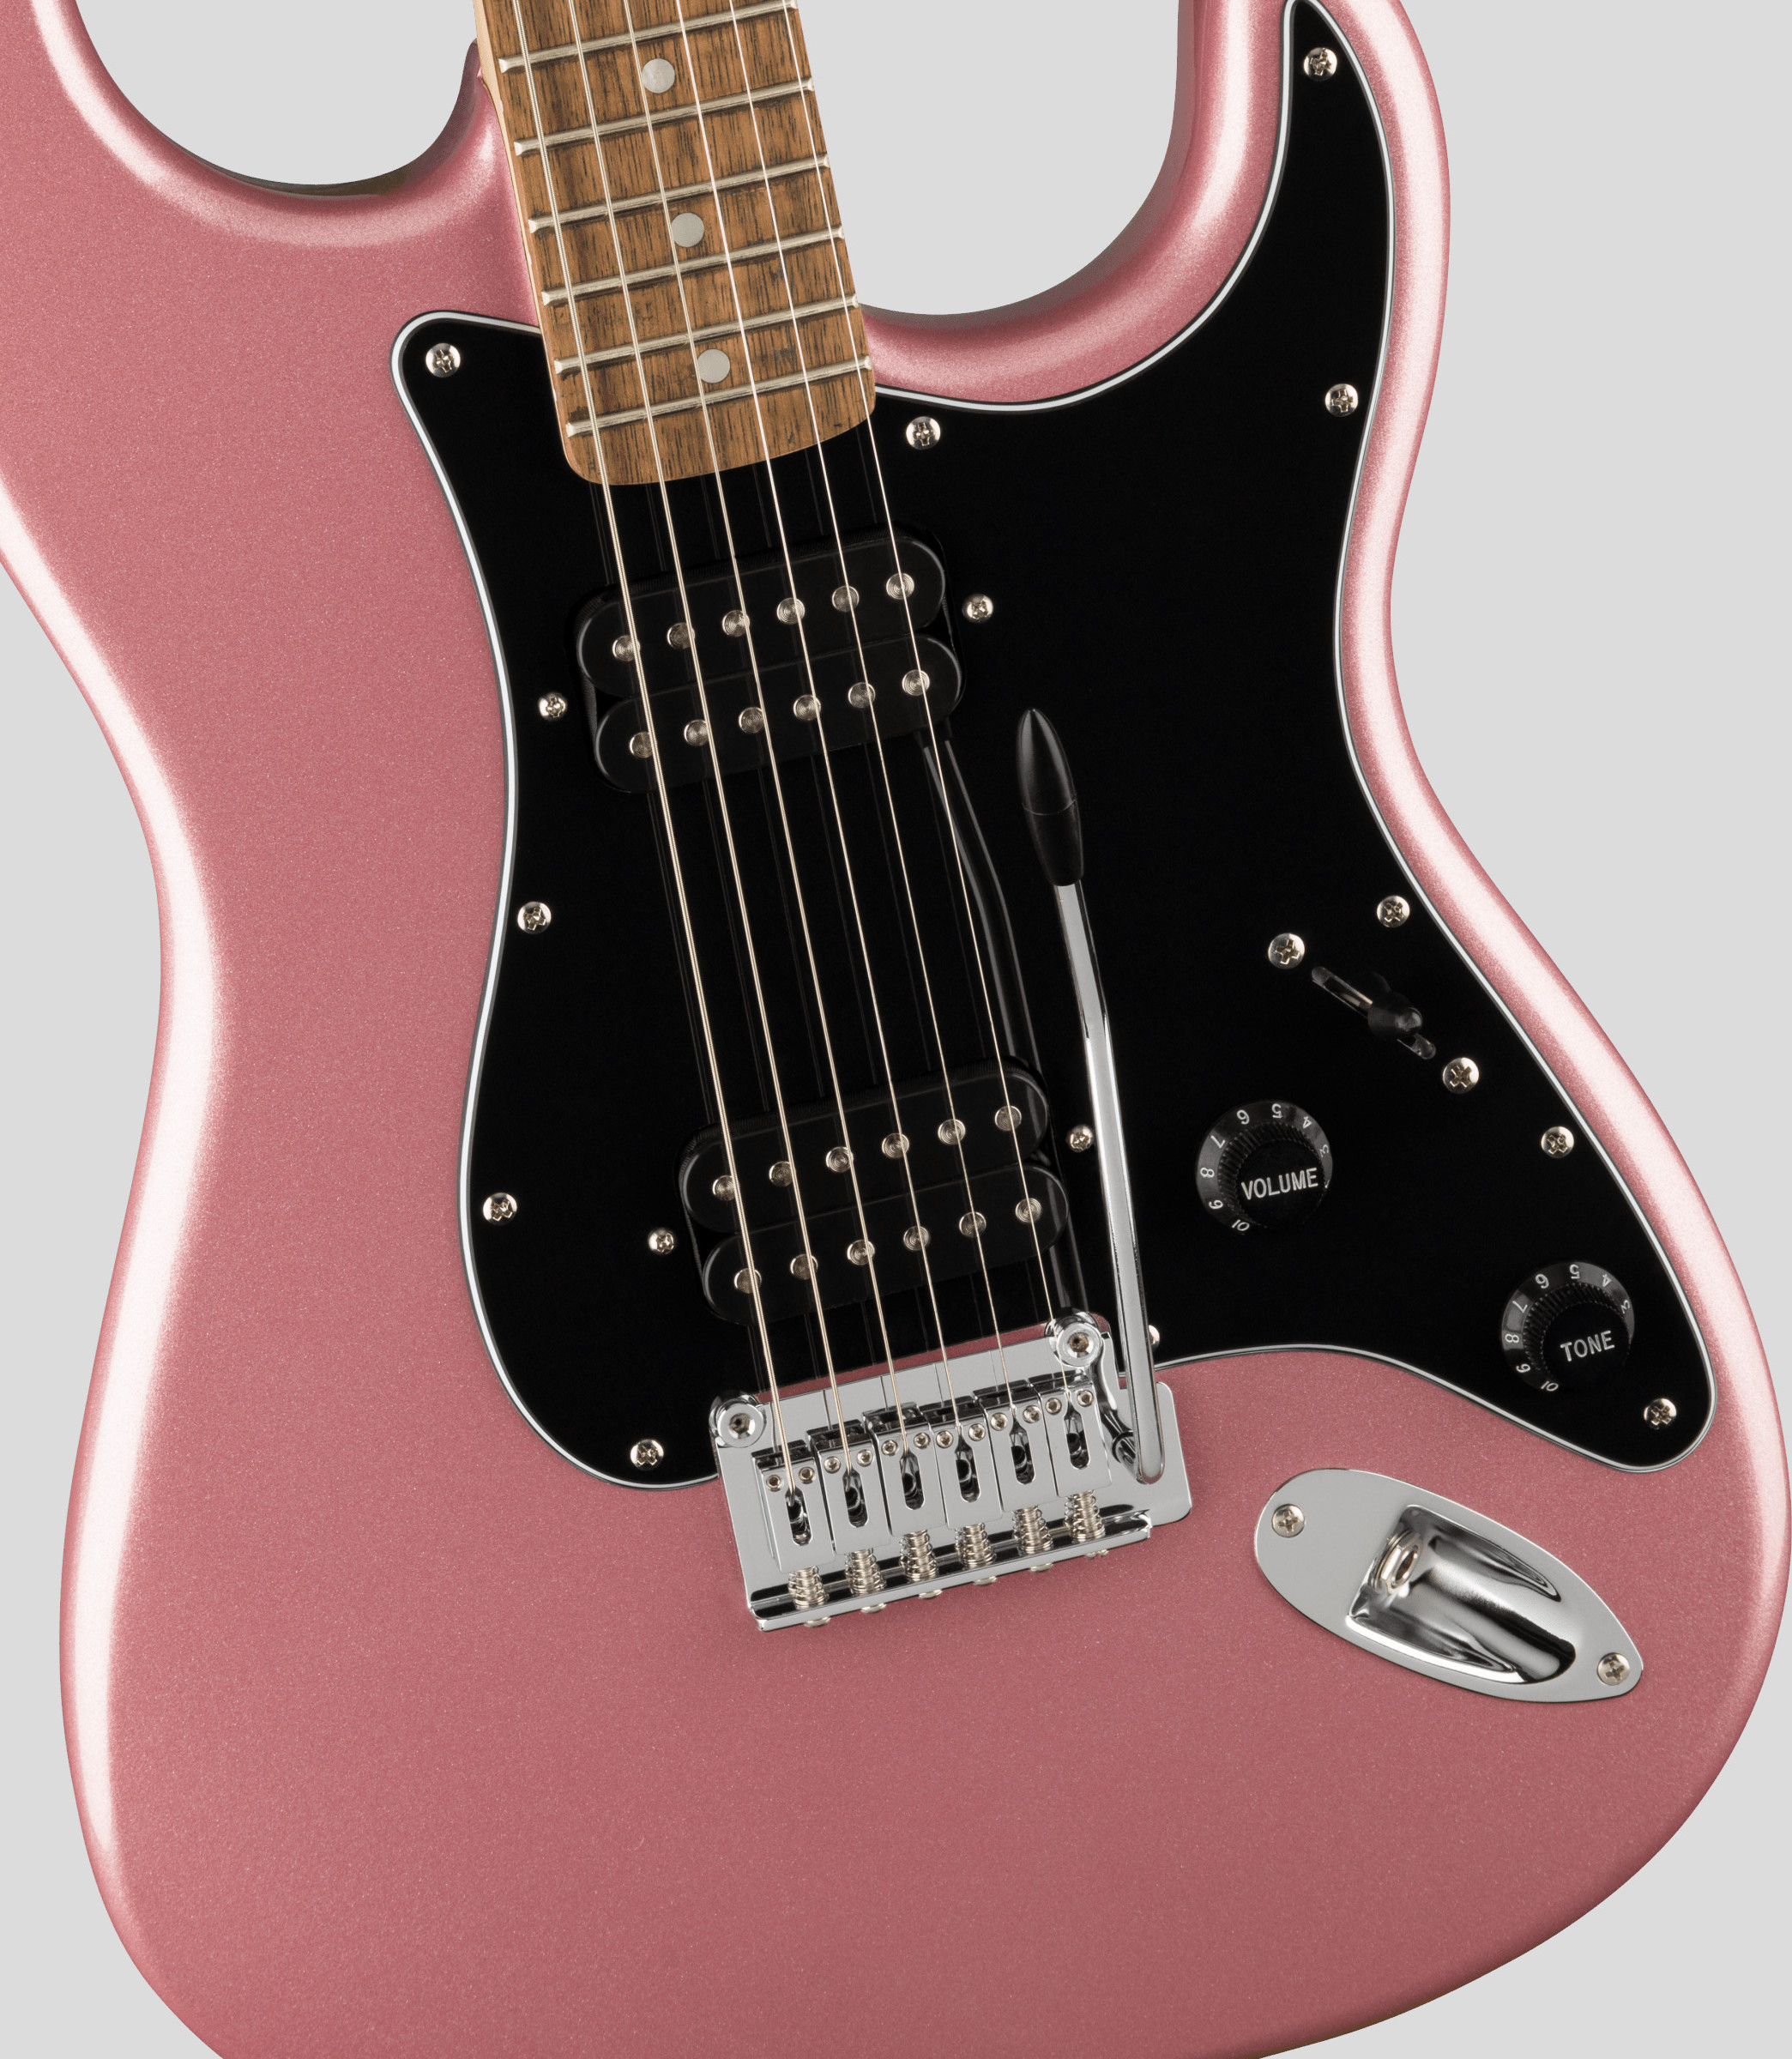 Squier by Fender Affinity Stratocaster HH Burgundy Mist 4